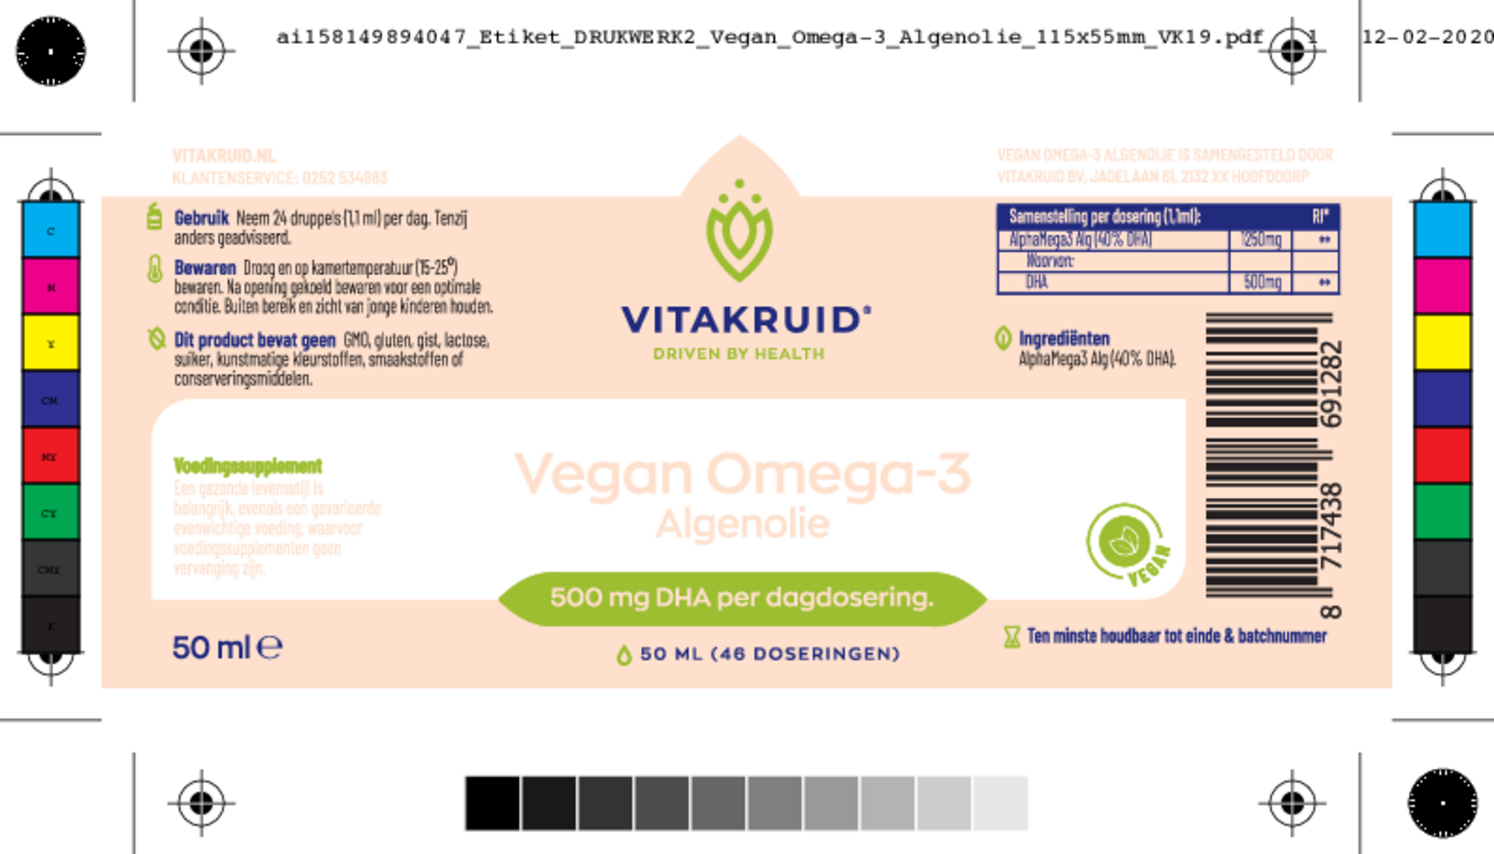 Omega-3 Algenolie afbeelding van document #2, etiket